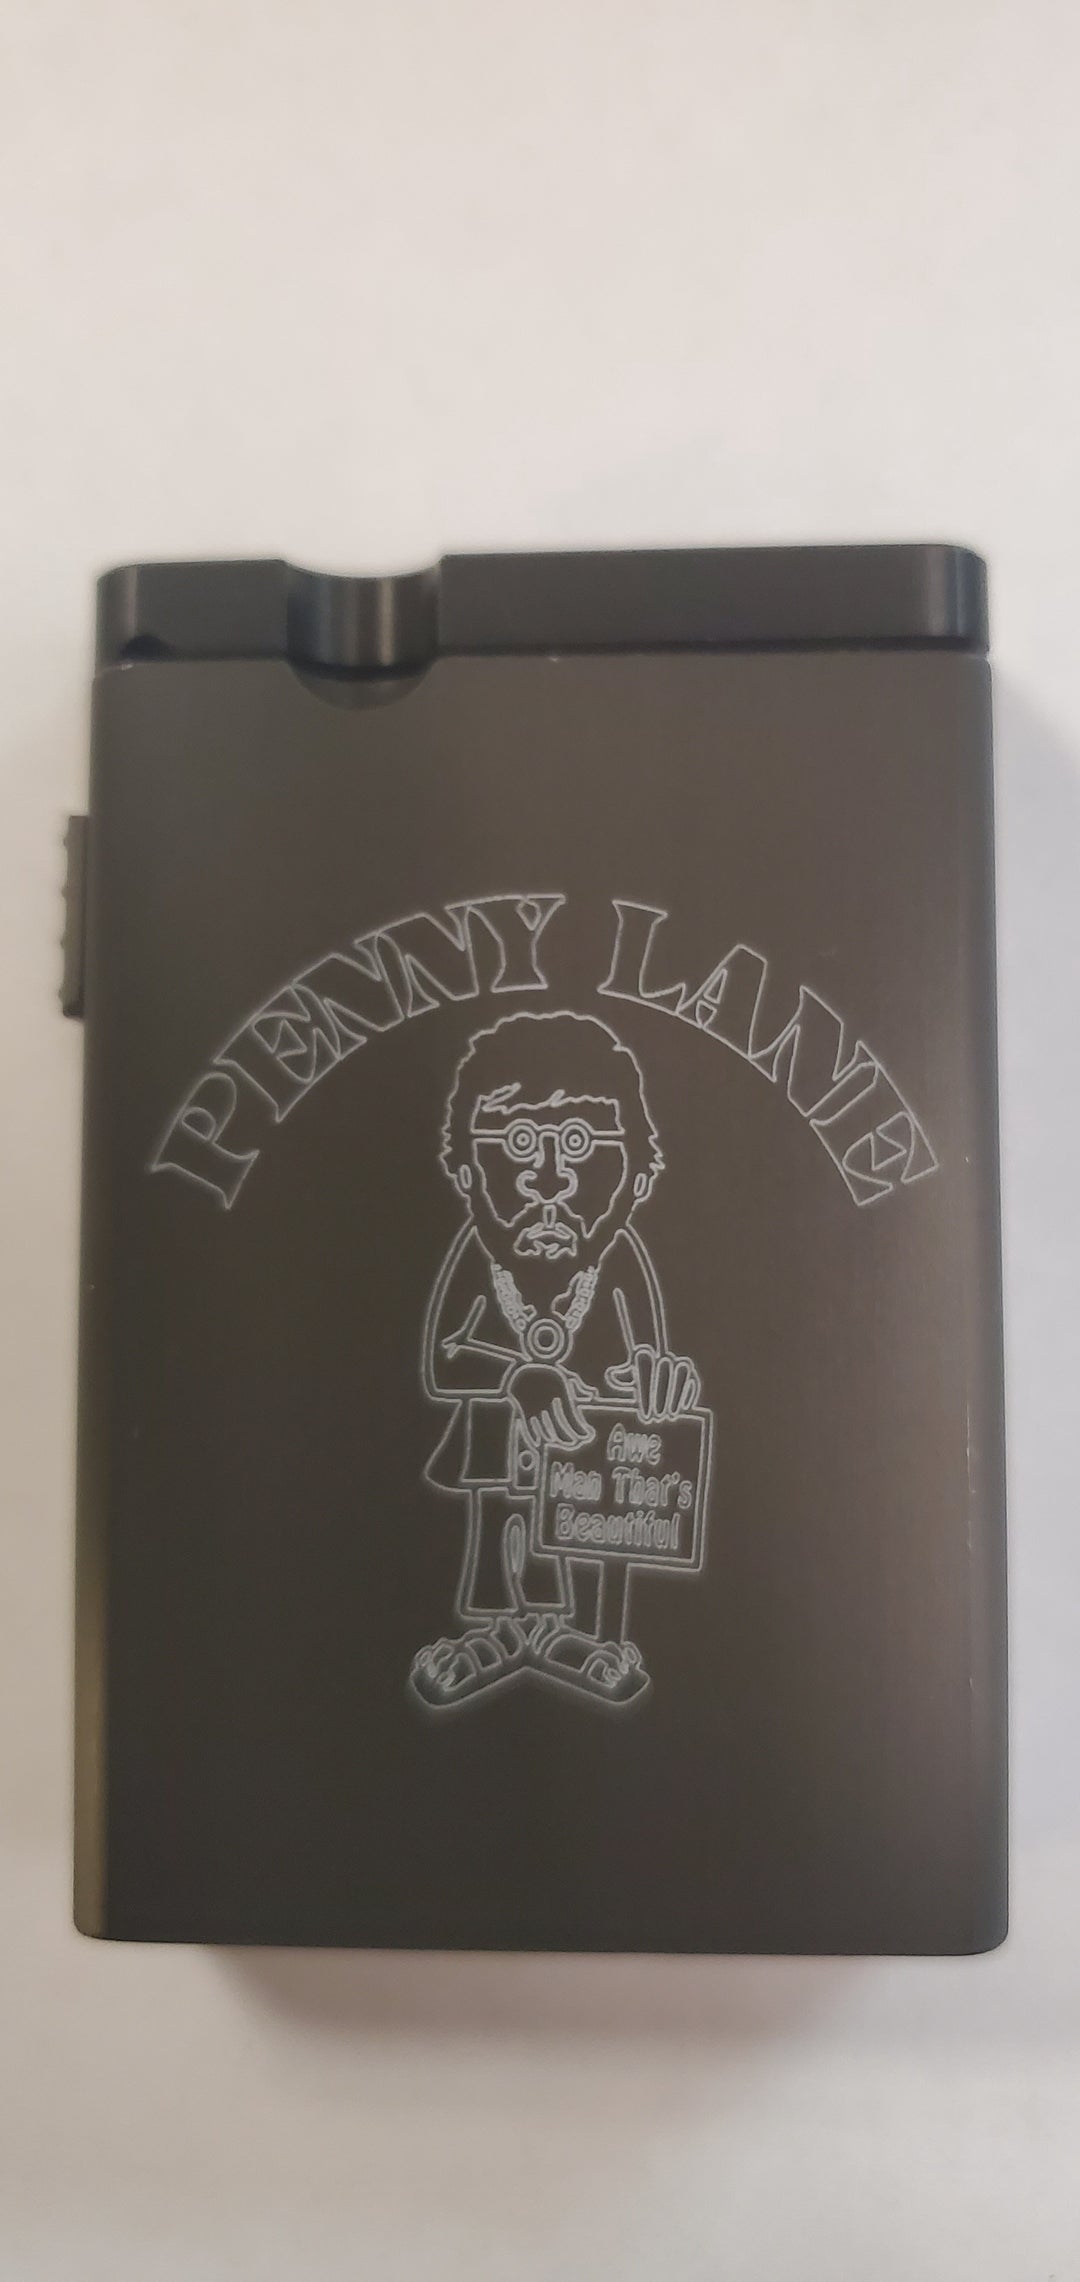 Penny Lane Metal Dugout w/Poker - Medium Grey